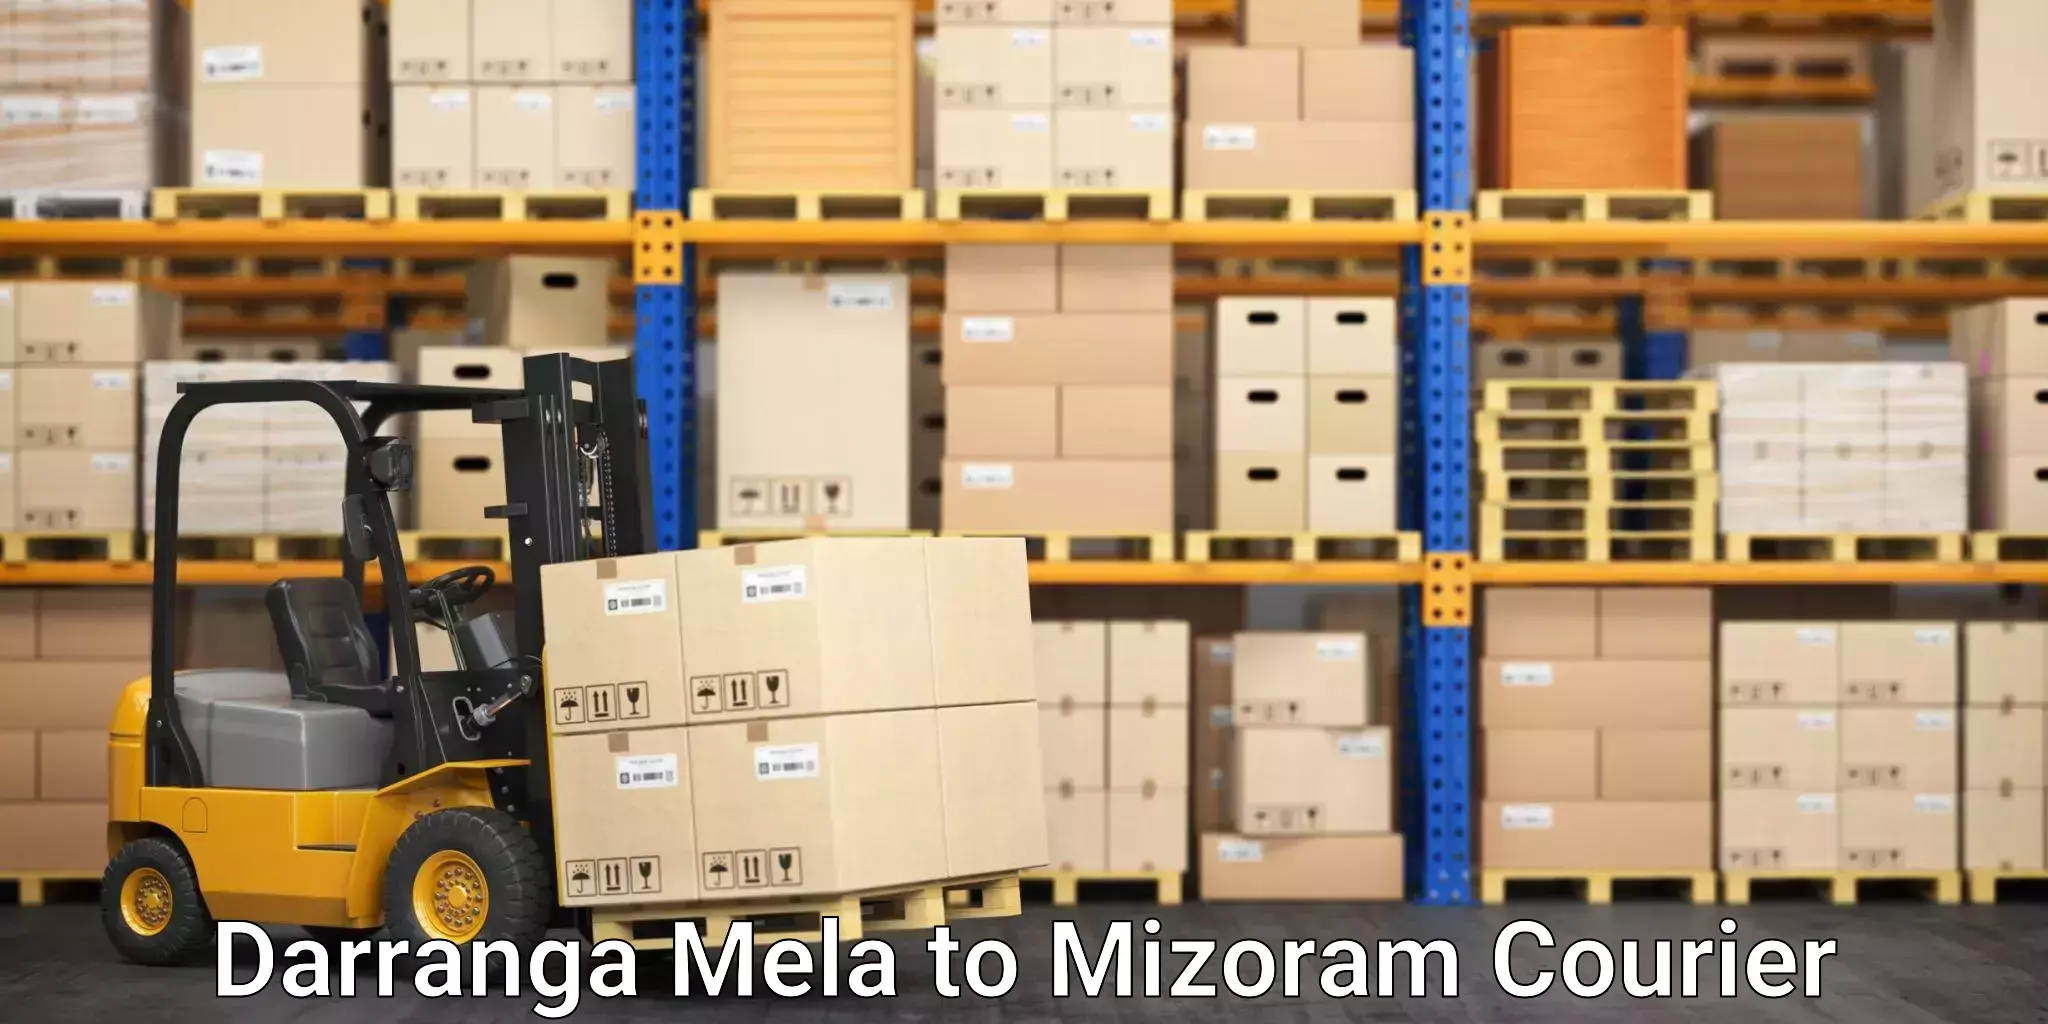 High-capacity shipping options Darranga Mela to Thenzawl